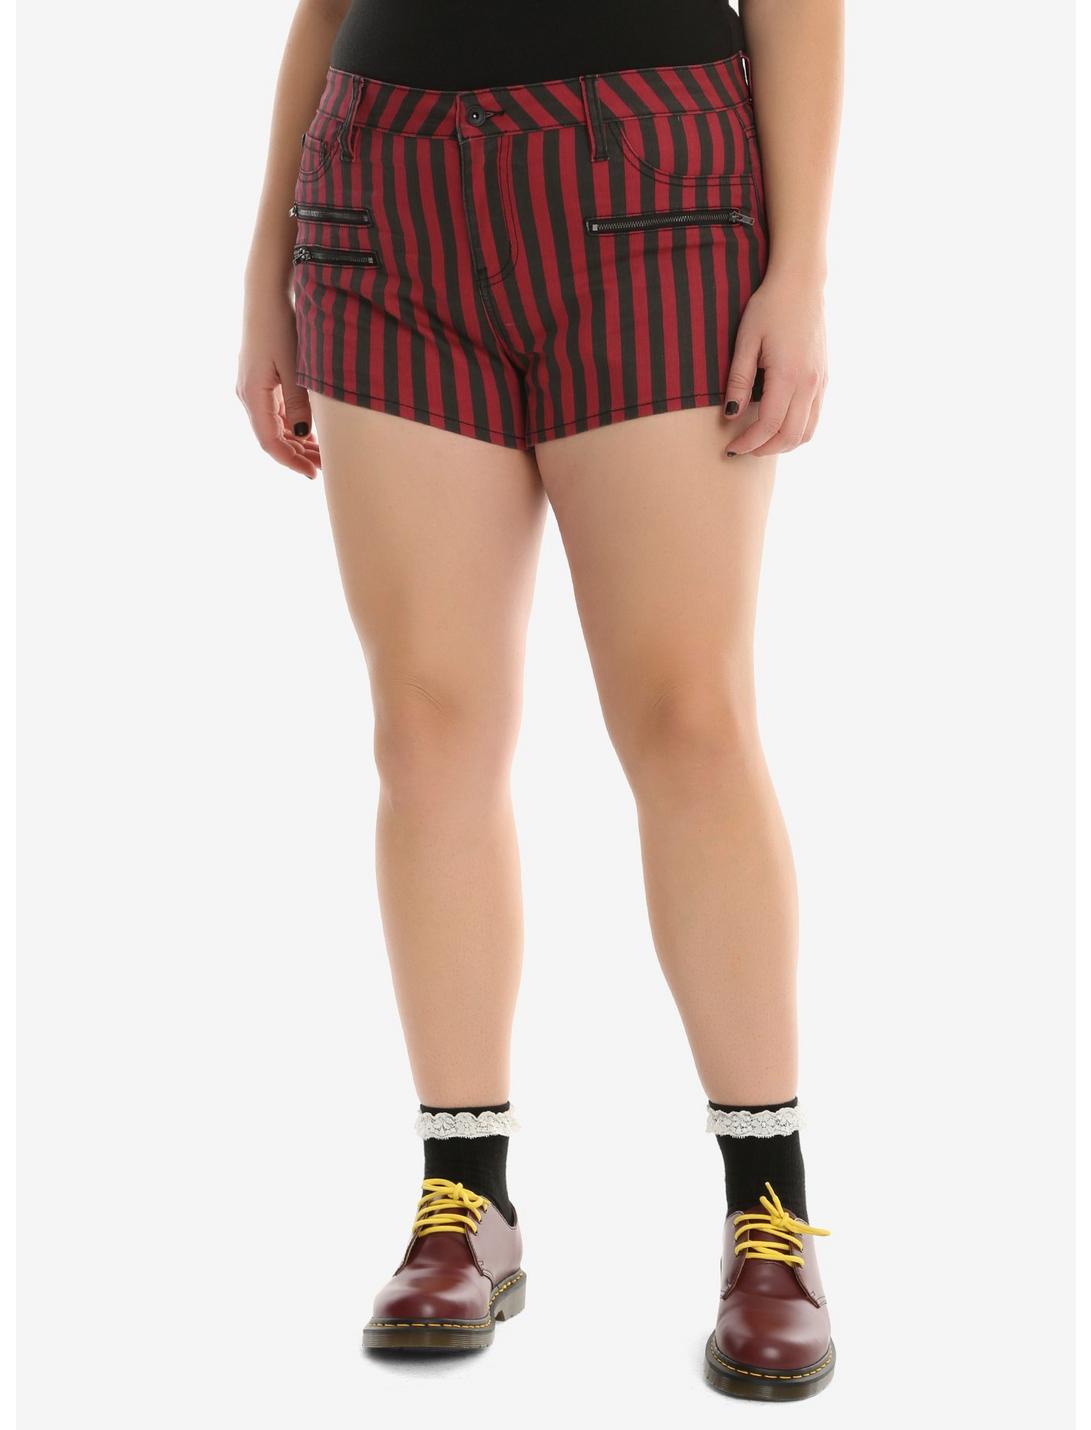 Blackheart Black & Red Striped Low Rise Shorts Plus Size, RED, hi-res